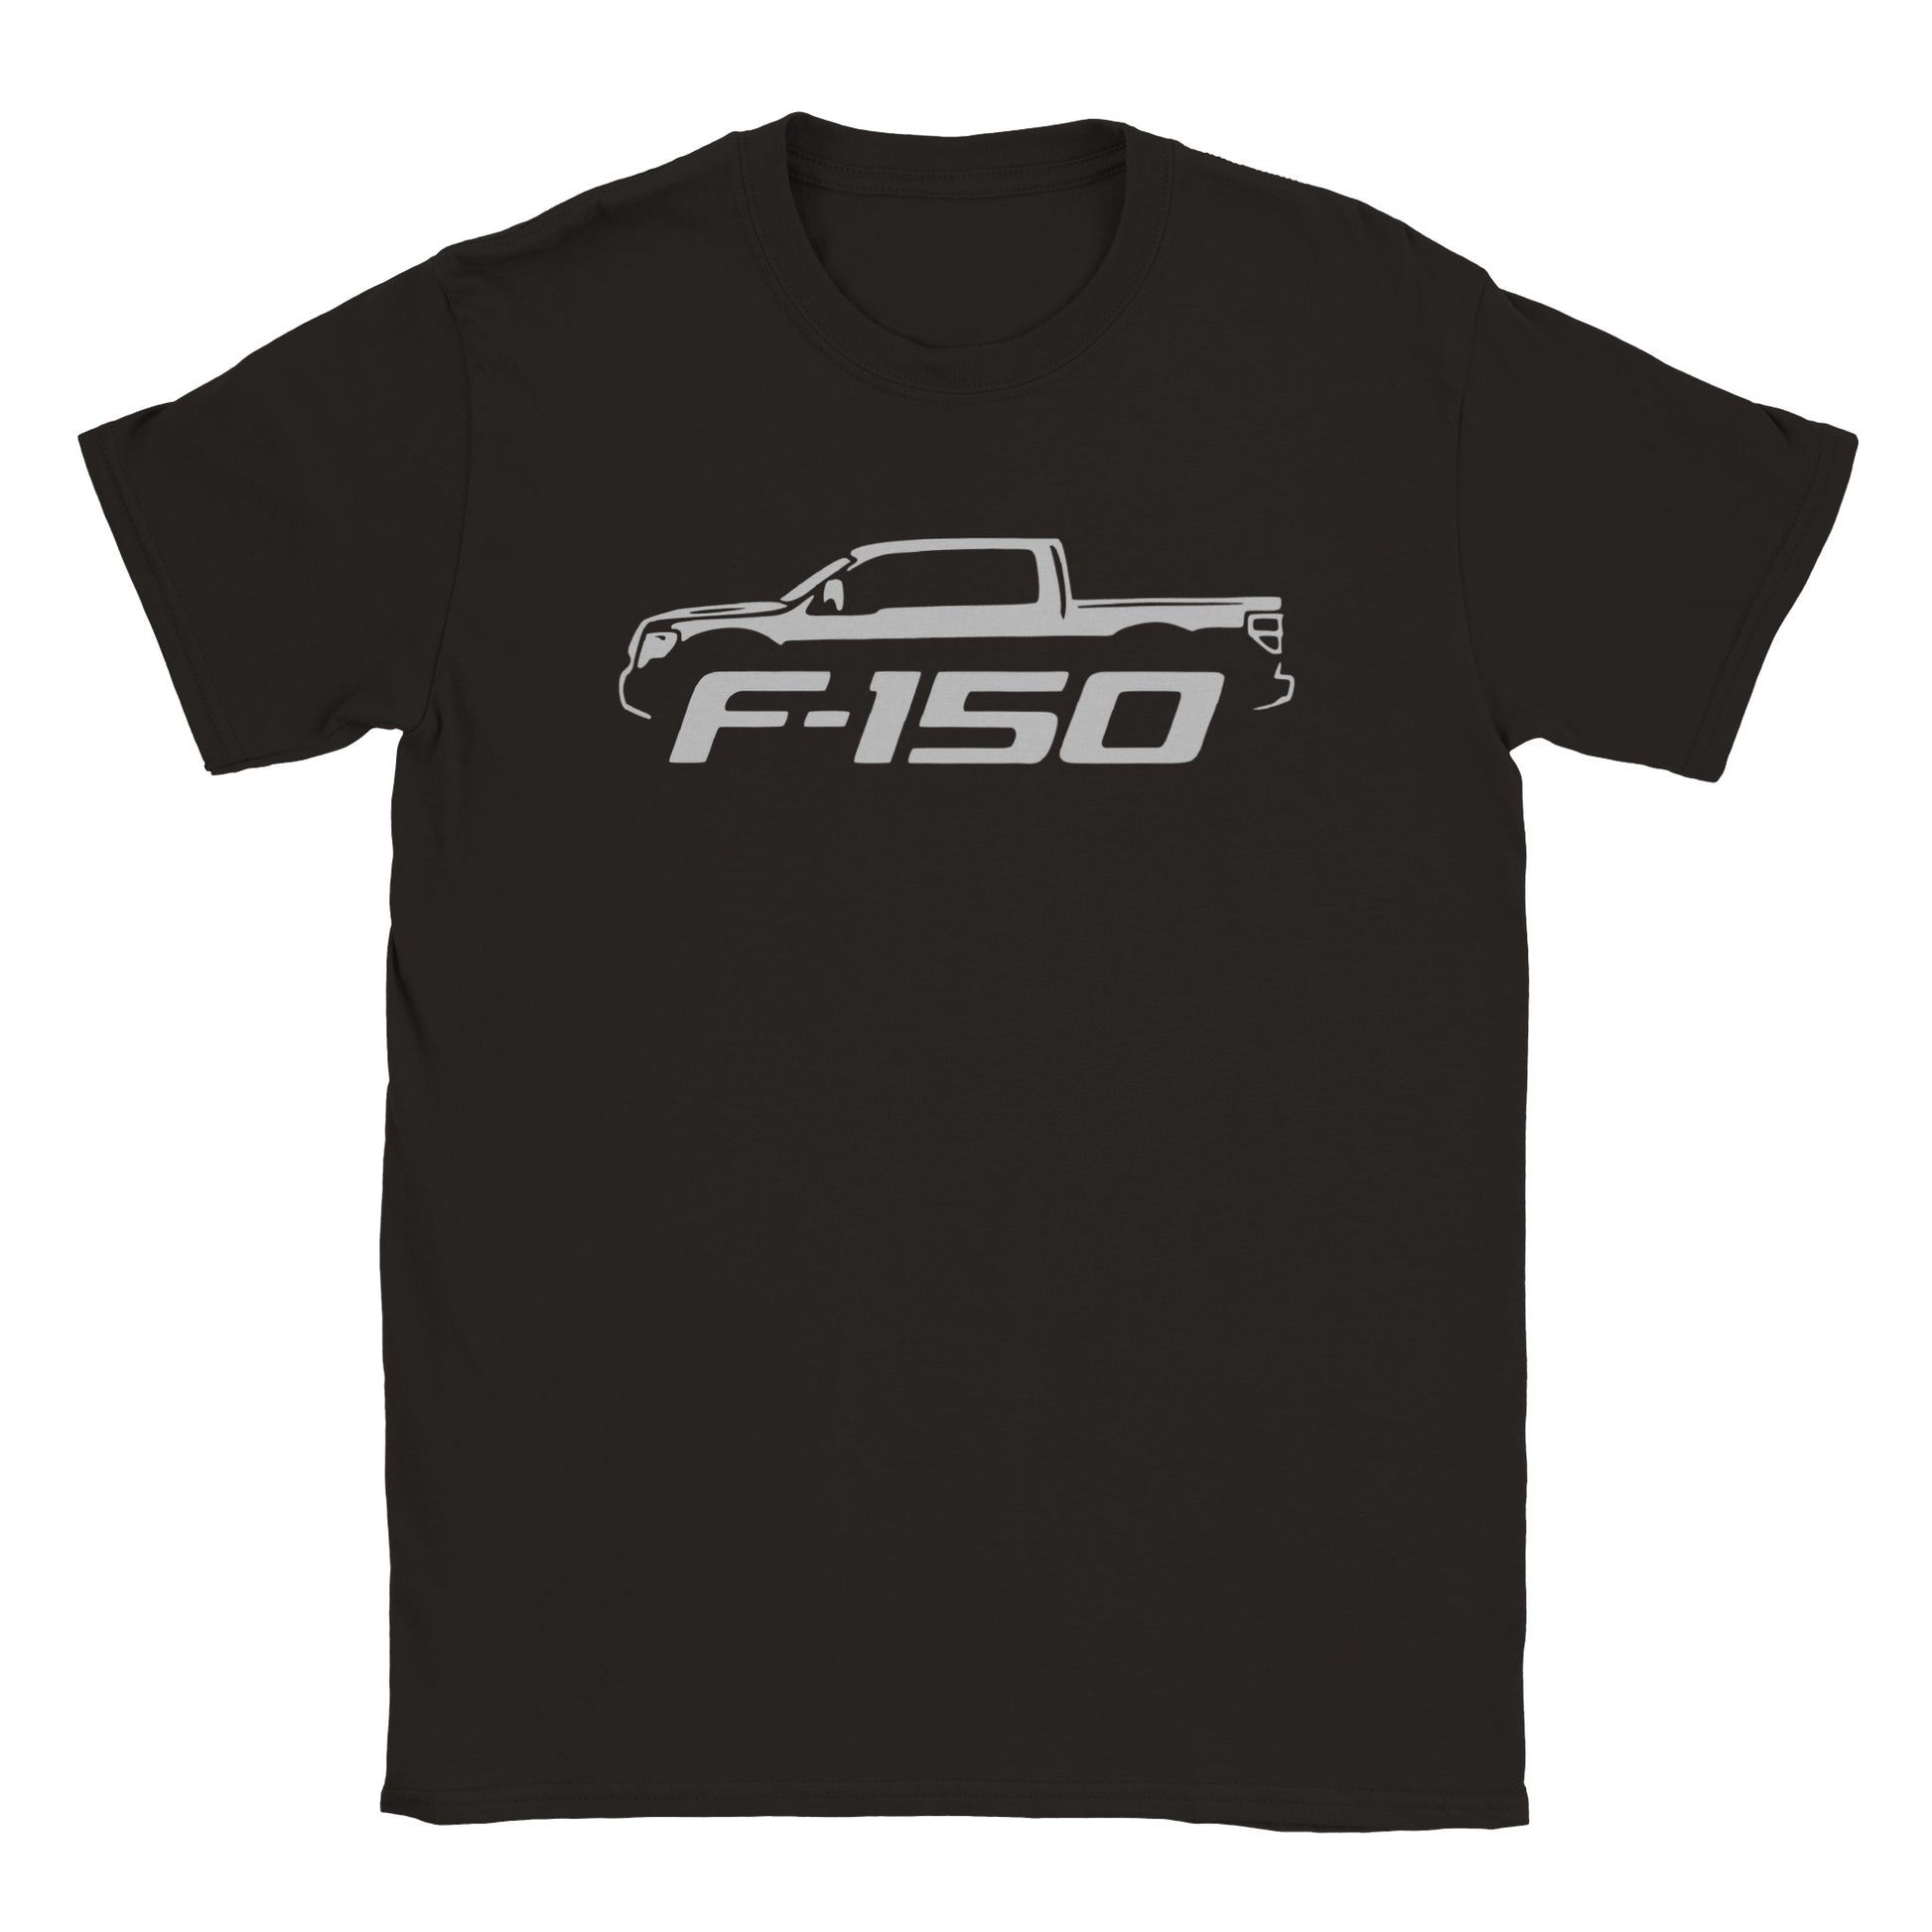 F-150 - Classic Unisex Crewneck T-shirt - Mister Snarky's